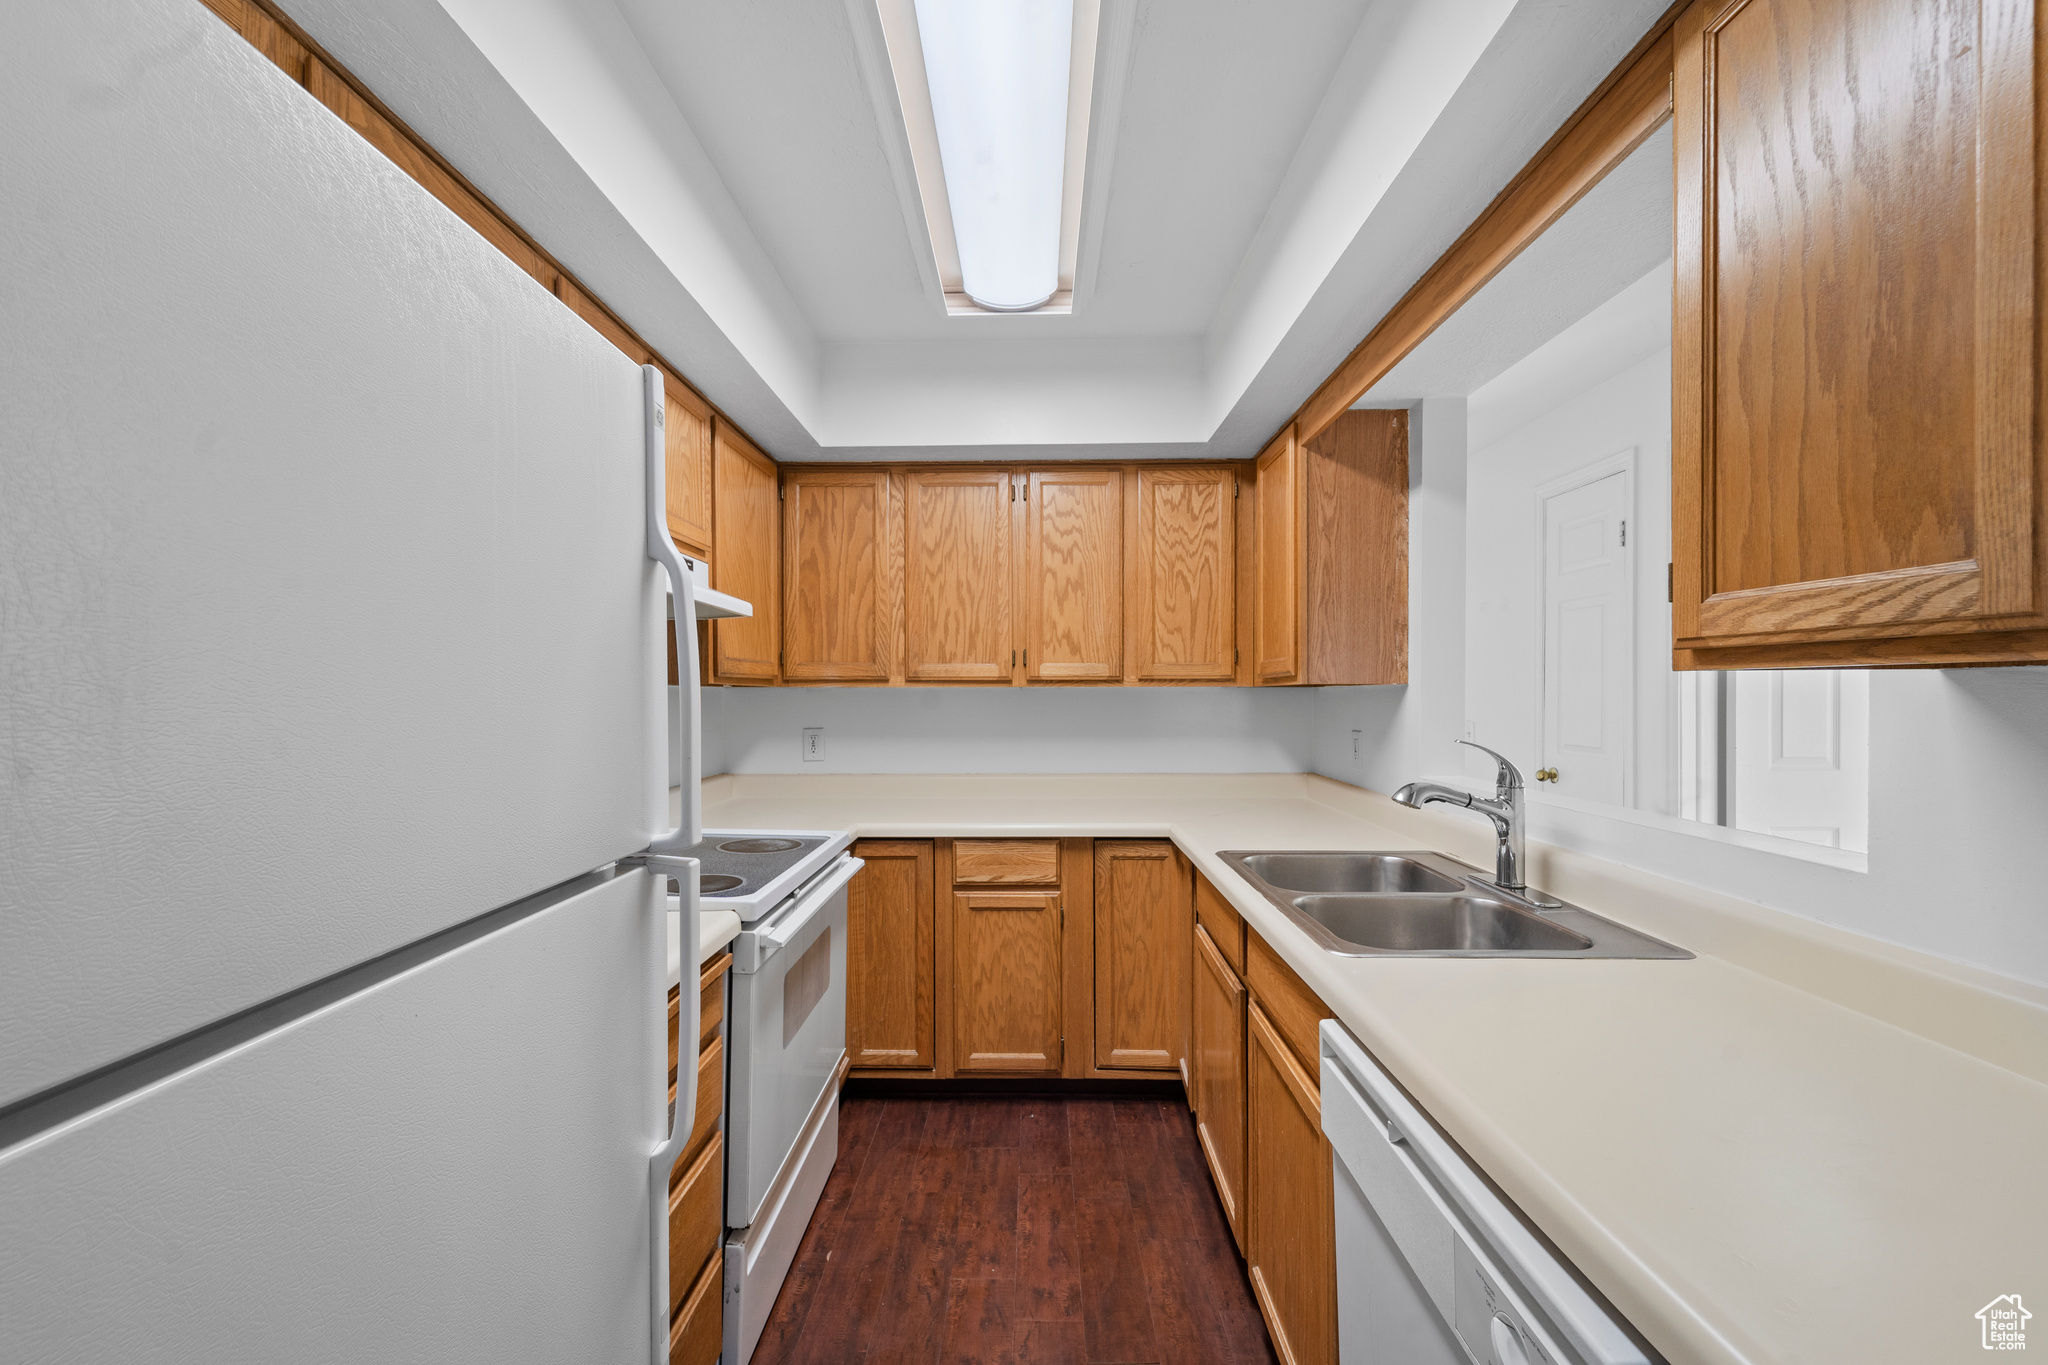 Kitchen with white appliances, dark hardwood-type laminate flooring, and sink